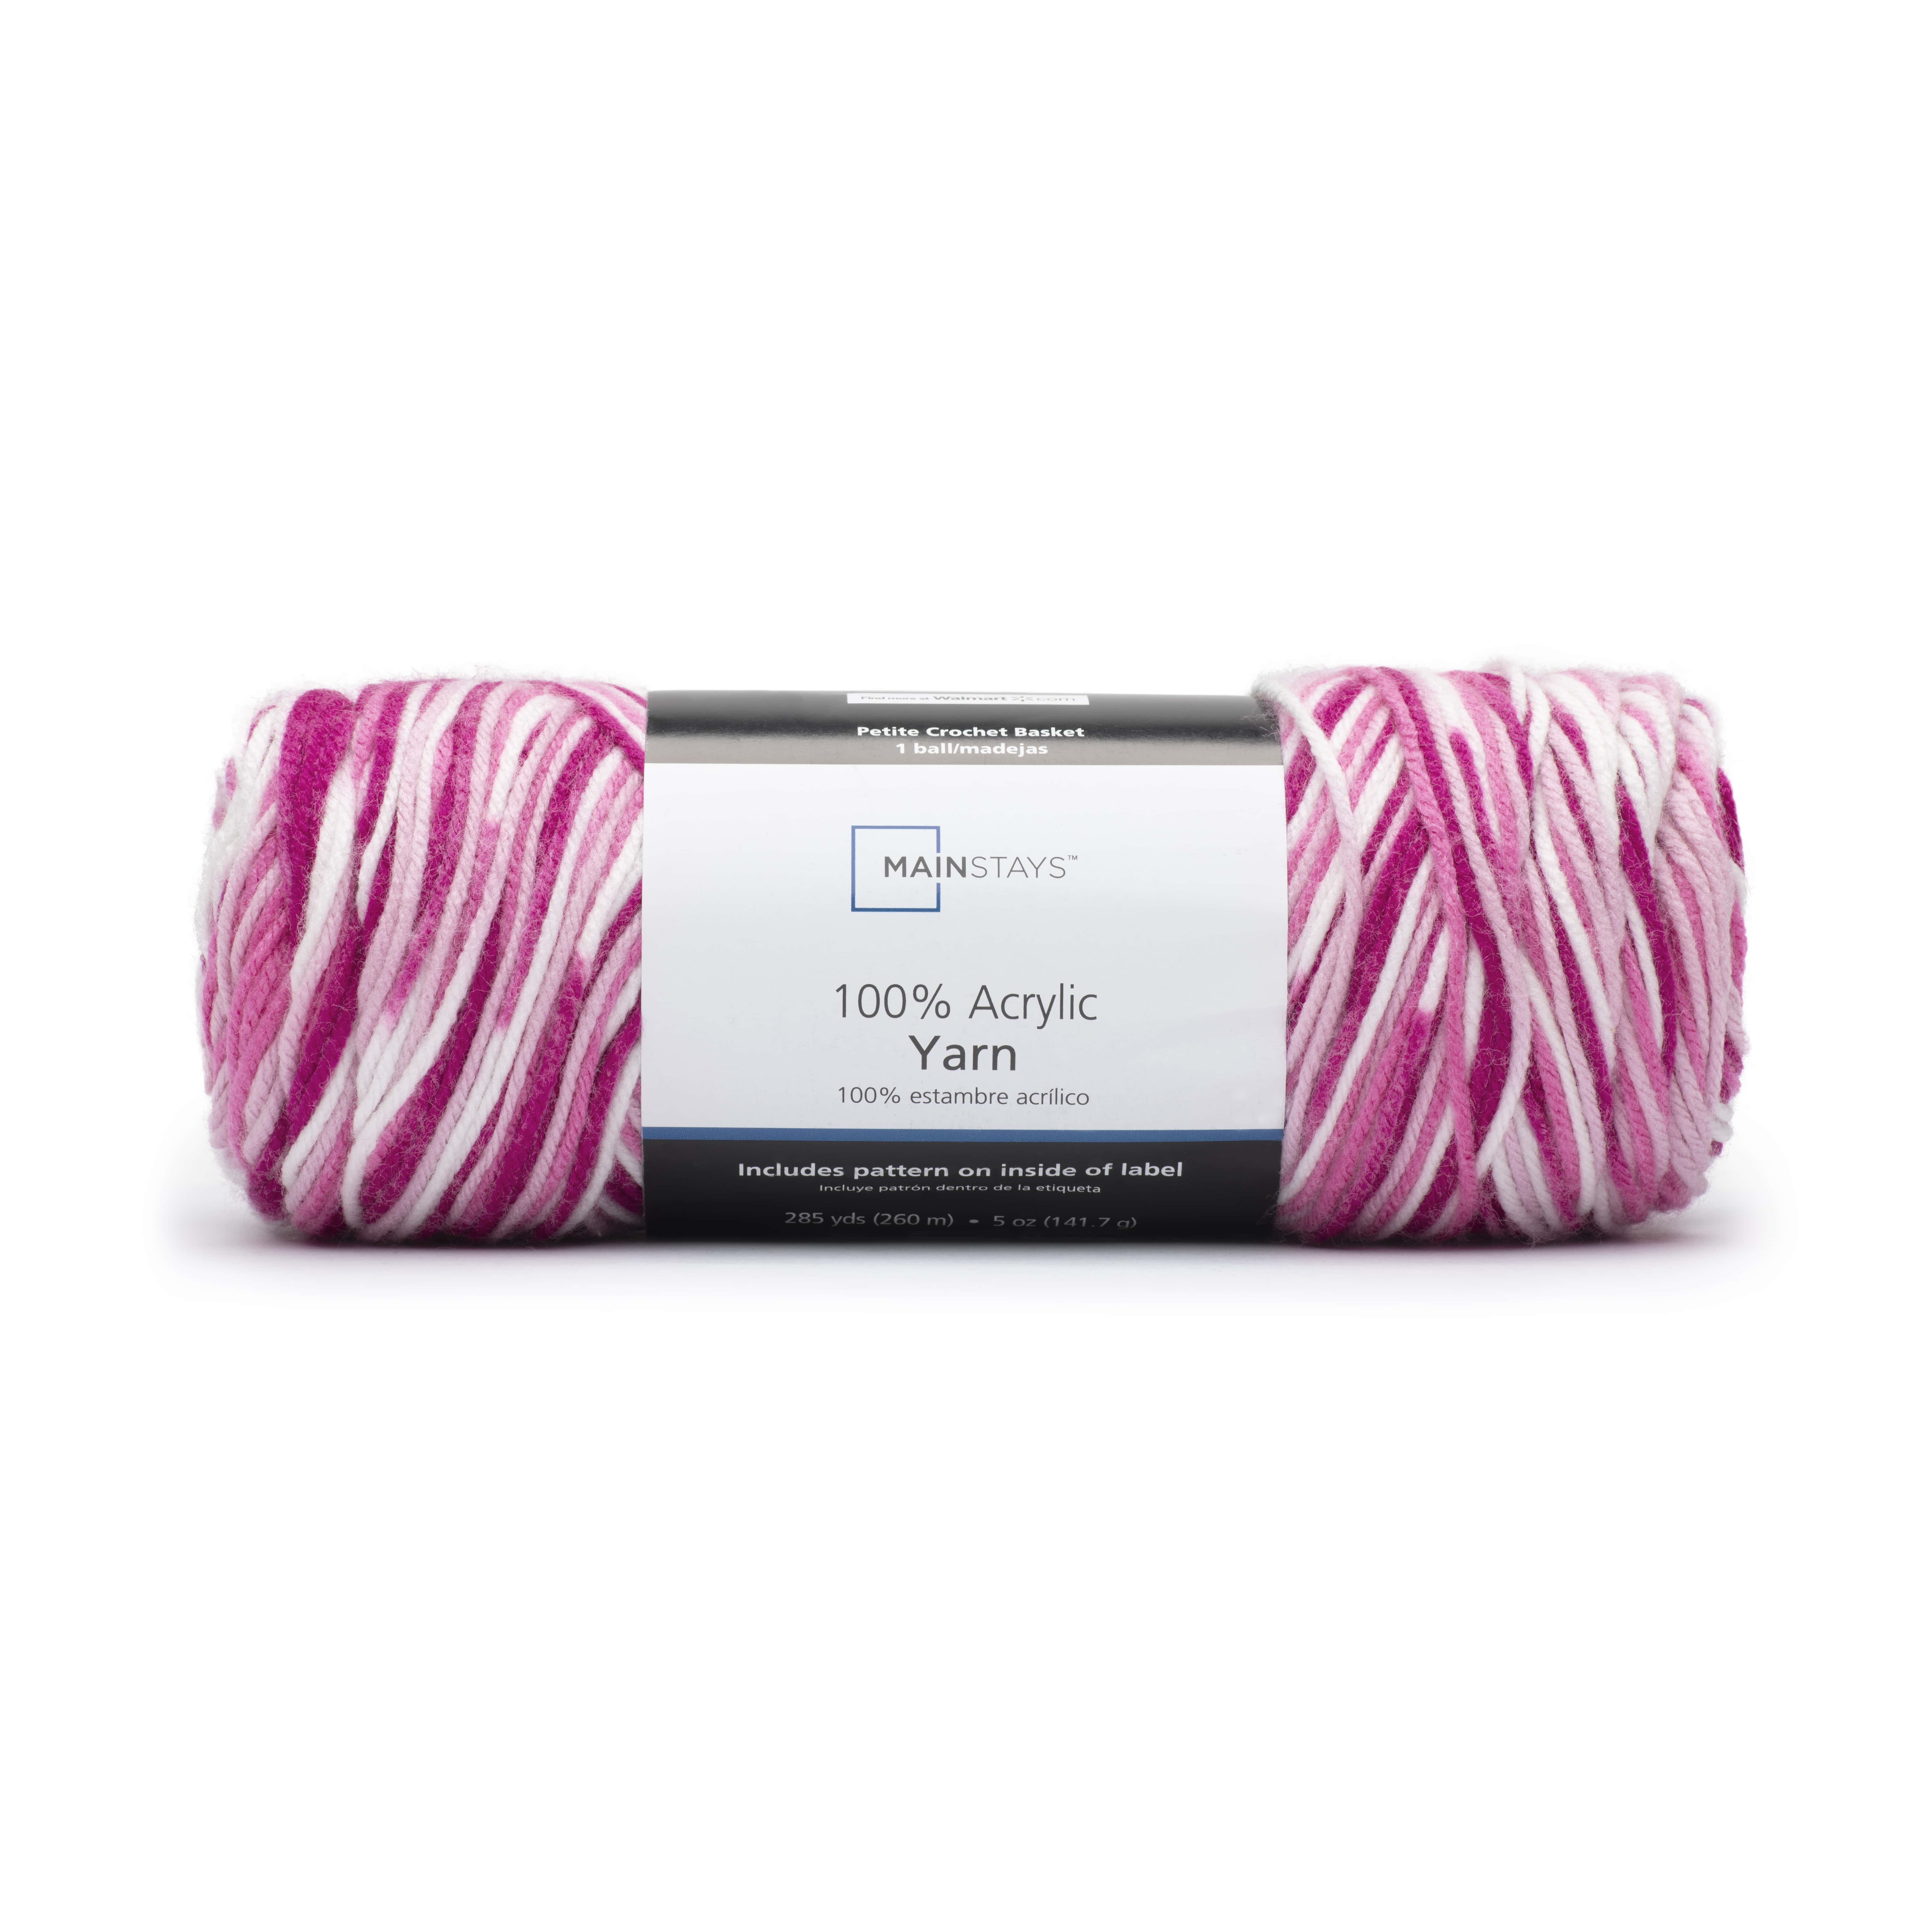 Fantasia Acrylic Yarn, L: 35 m, Maxi , Neon Pink, 50 G, 1 Ball